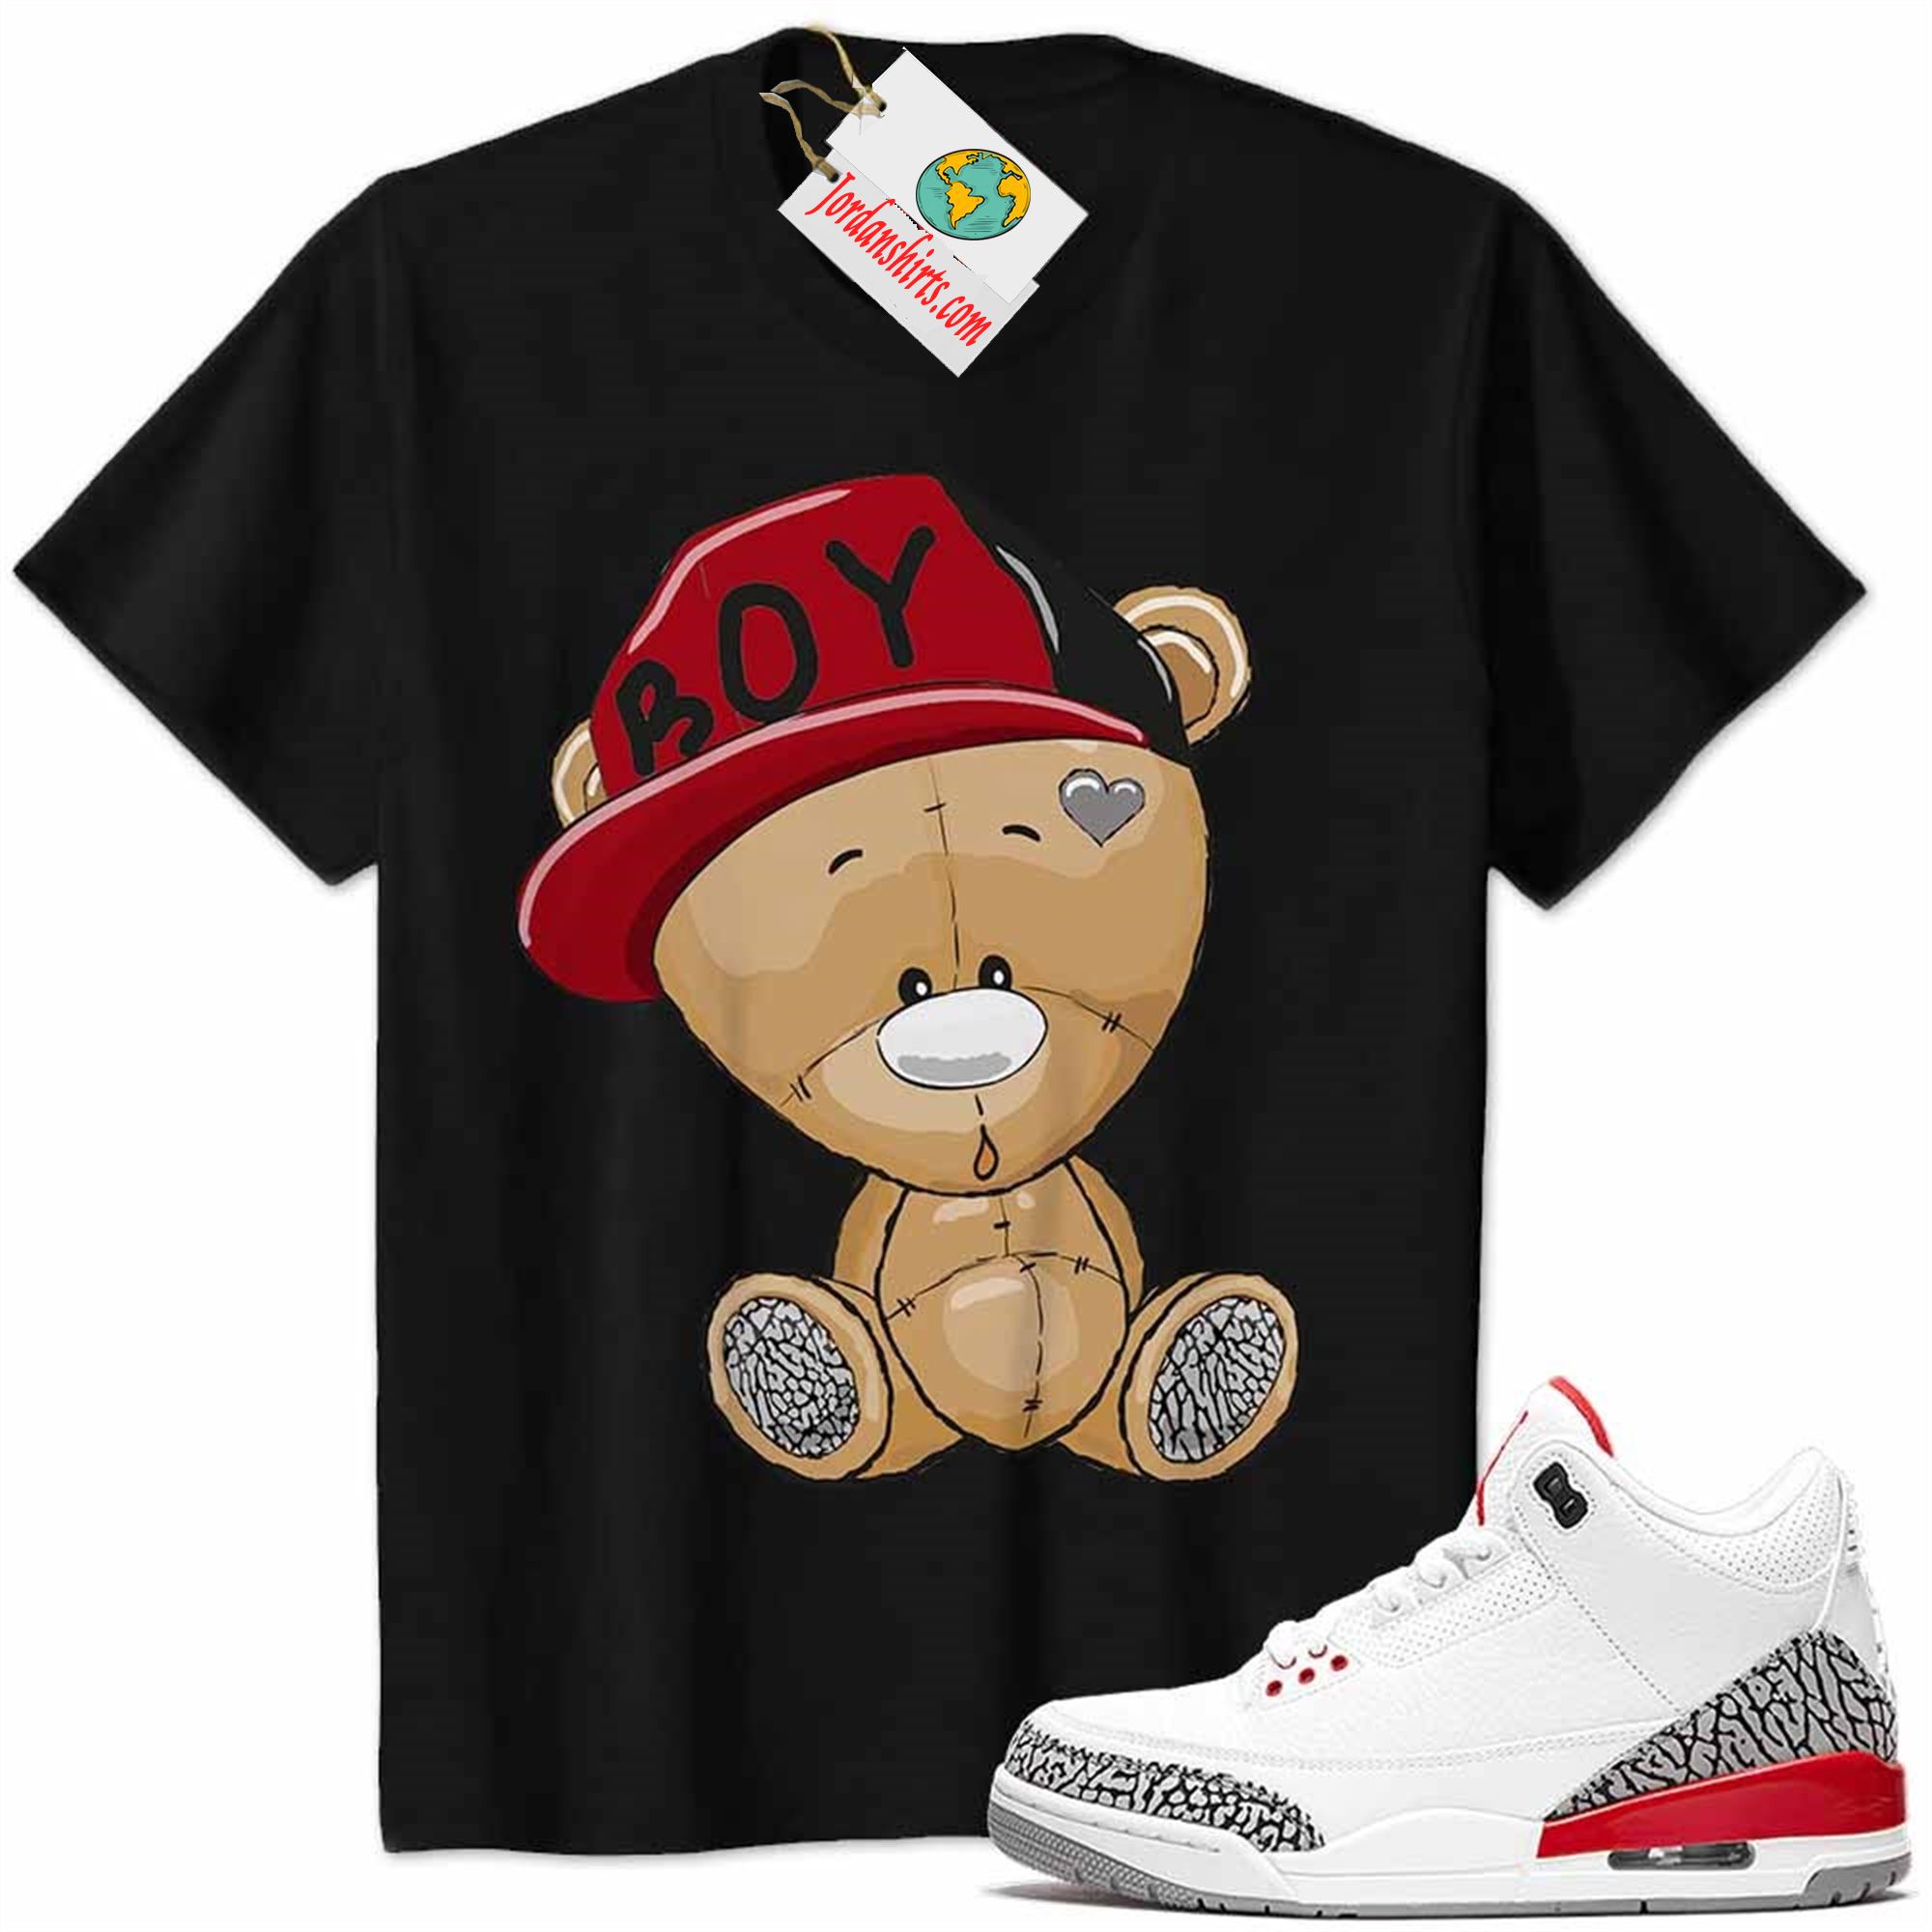 Jordan 3 Shirt, Jordan 3 Katrina Shirt Cute Baby Teddy Bear Black Plus Size Up To 5xl